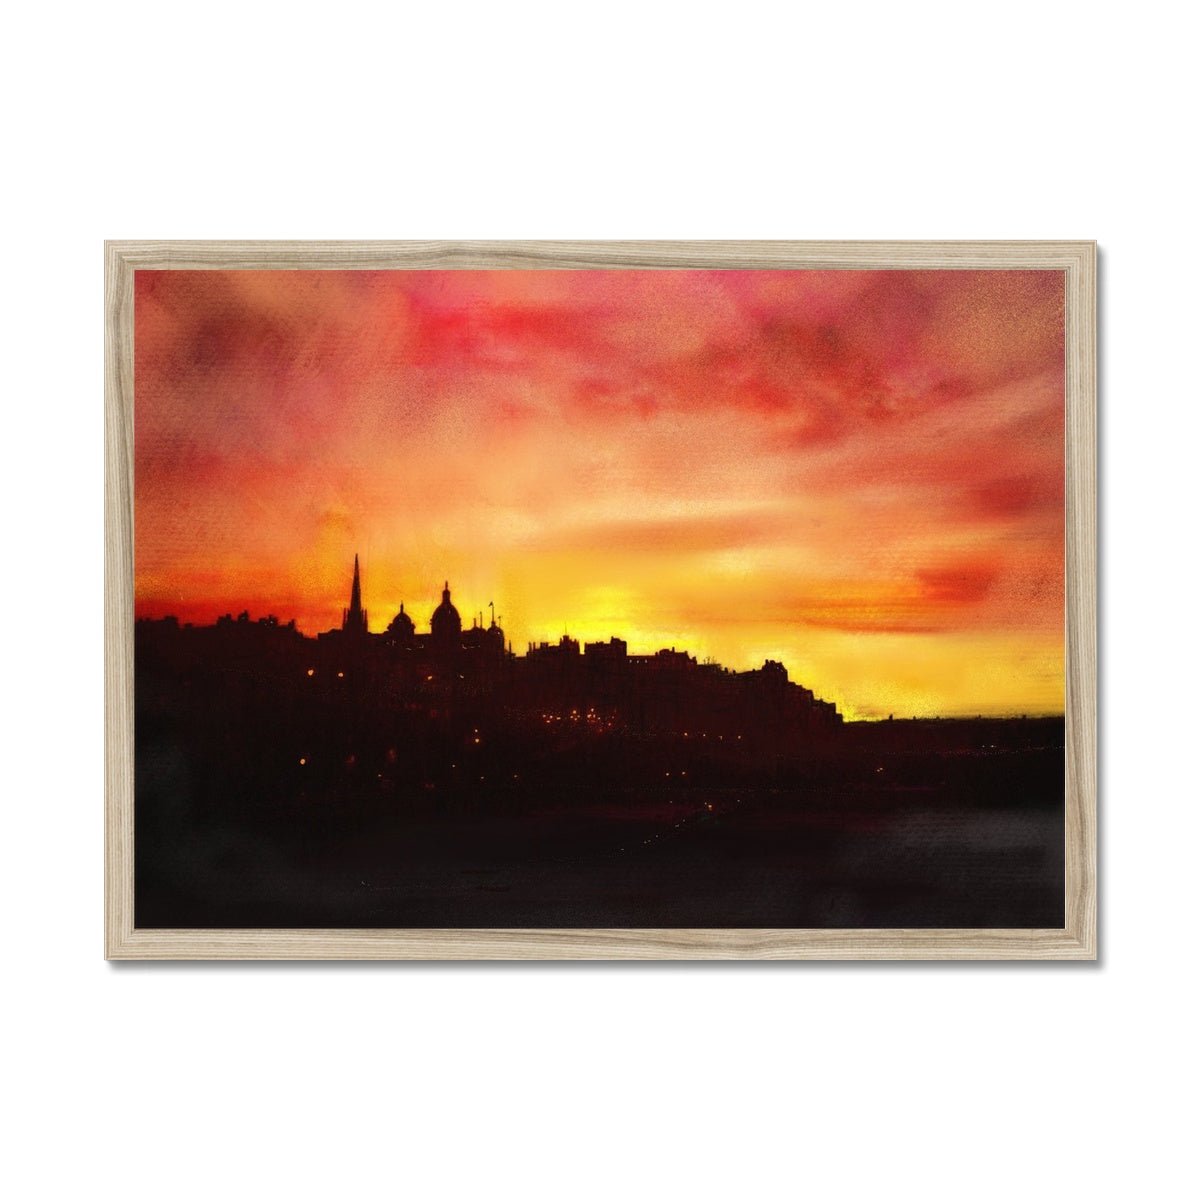 Edinburgh Sunset Painting | Framed Prints From Scotland-Framed Prints-Edinburgh & Glasgow Art Gallery-A2 Landscape-Natural Frame-Paintings, Prints, Homeware, Art Gifts From Scotland By Scottish Artist Kevin Hunter